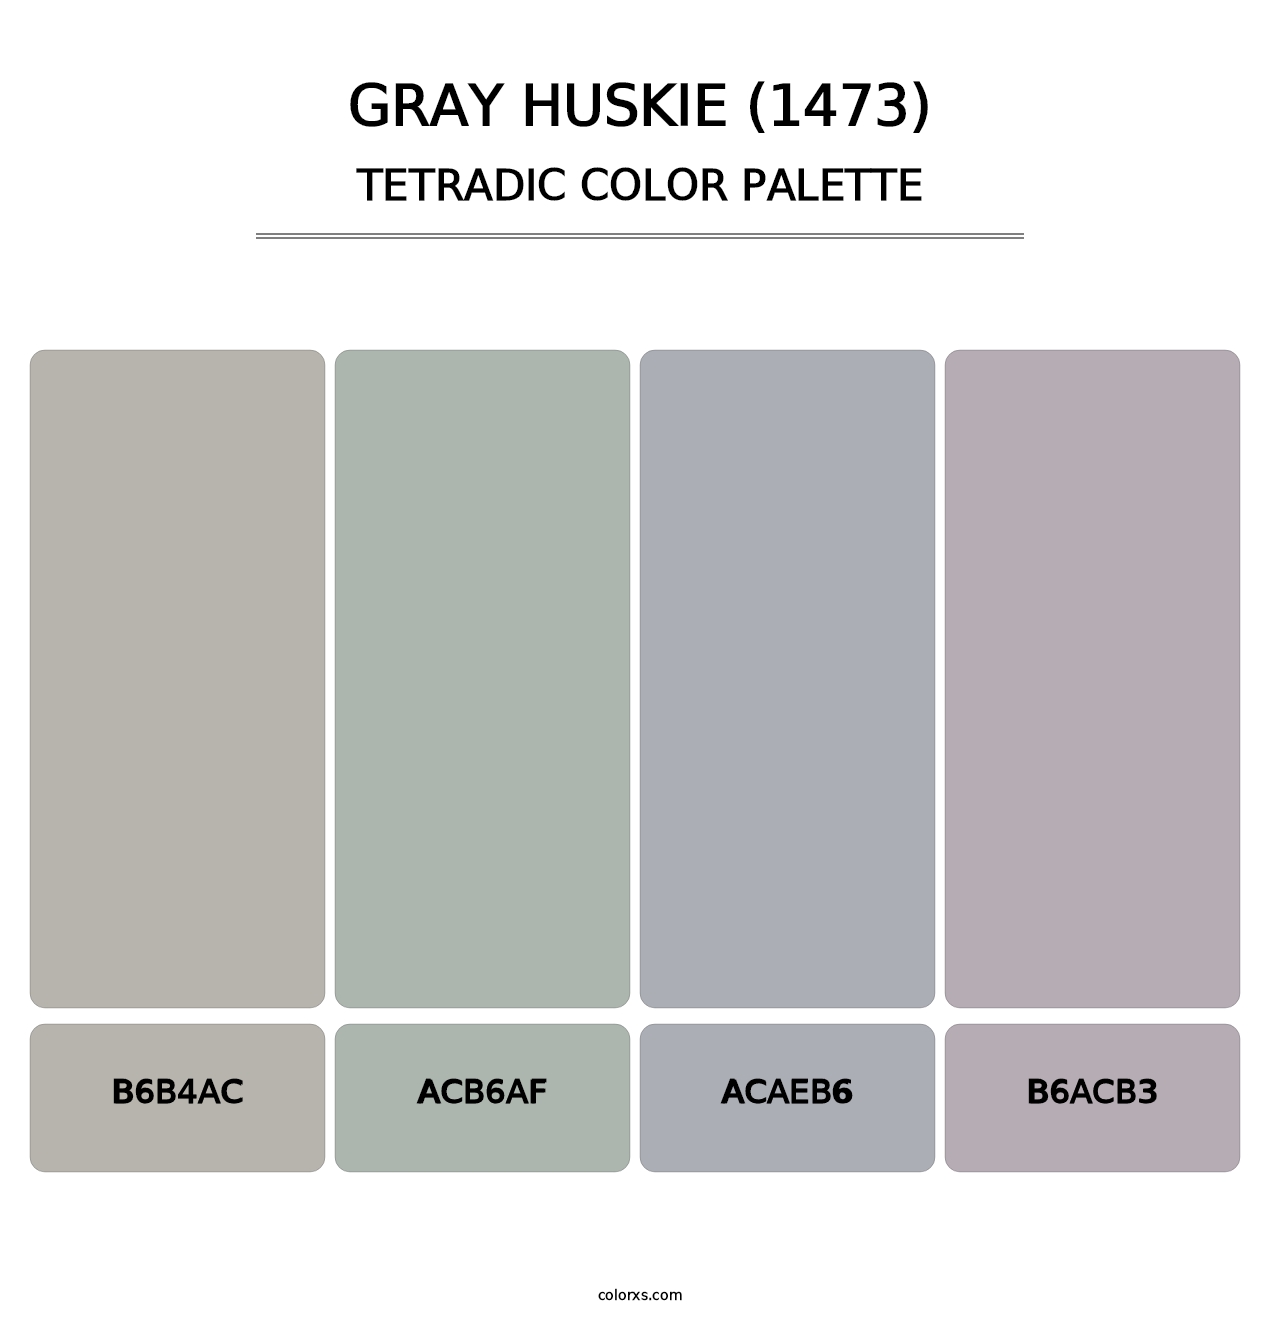 Gray Huskie (1473) - Tetradic Color Palette